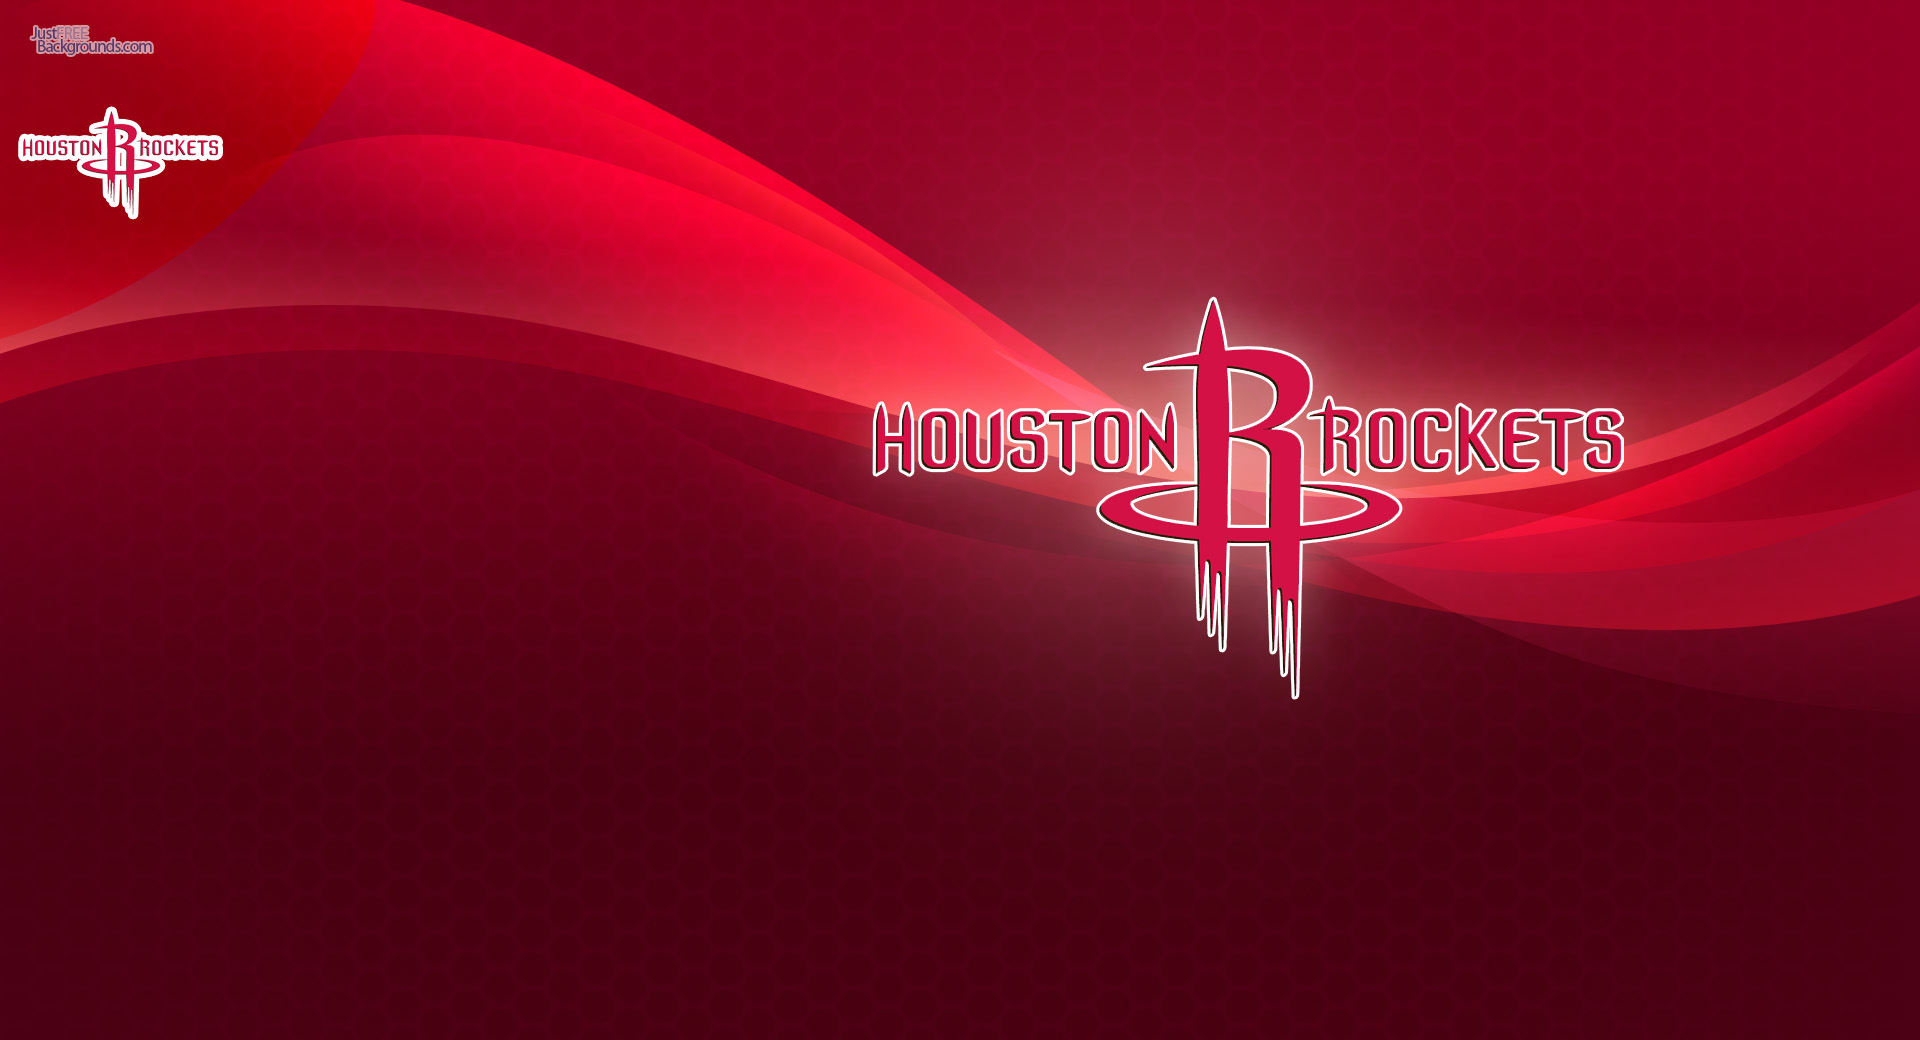 Houston Rockets Pap Is De Parede Plano Fundo Rea Trabalho